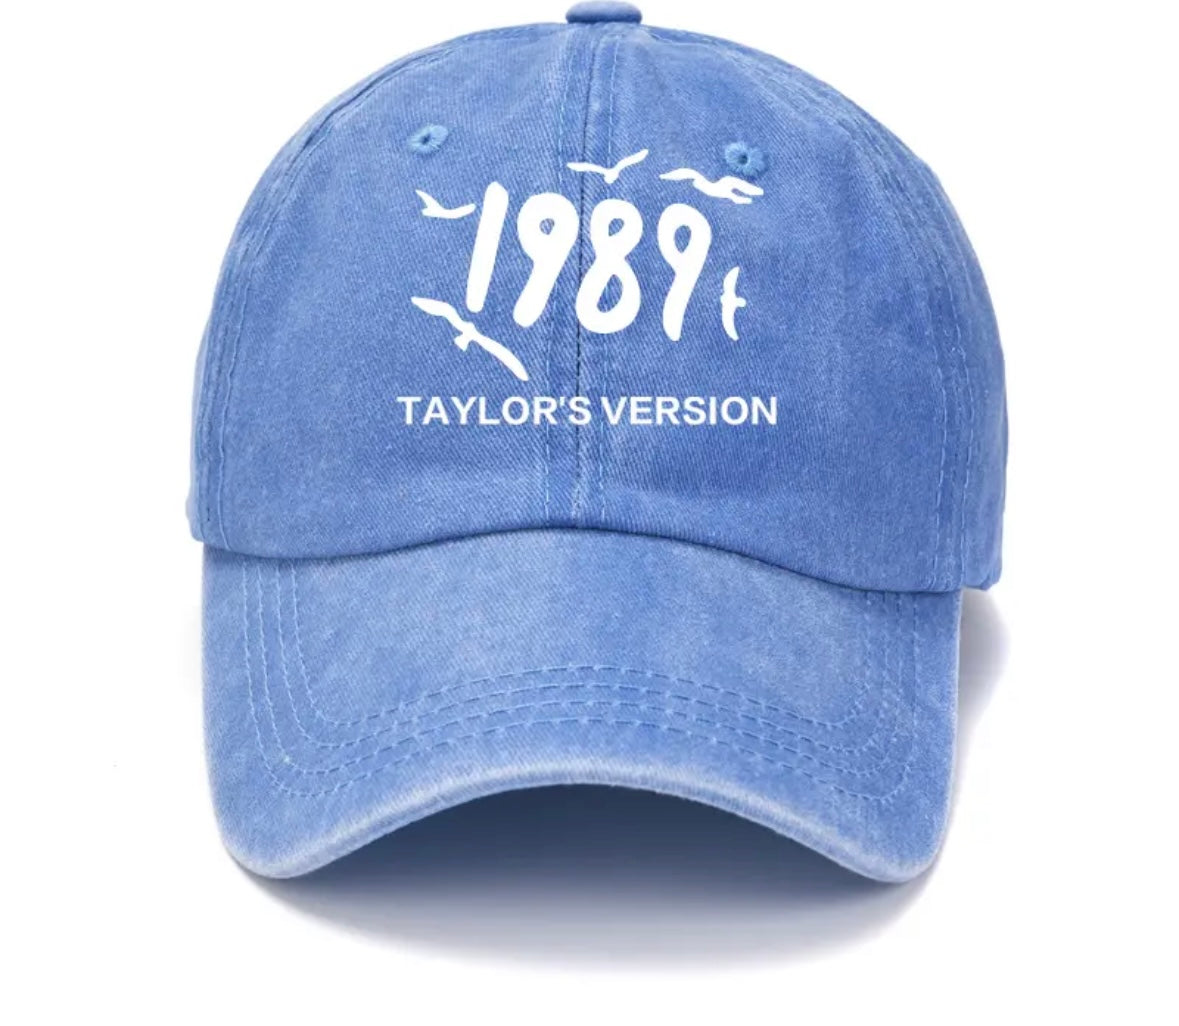 1989 Taylor’s Version Baseball Cap - Blue